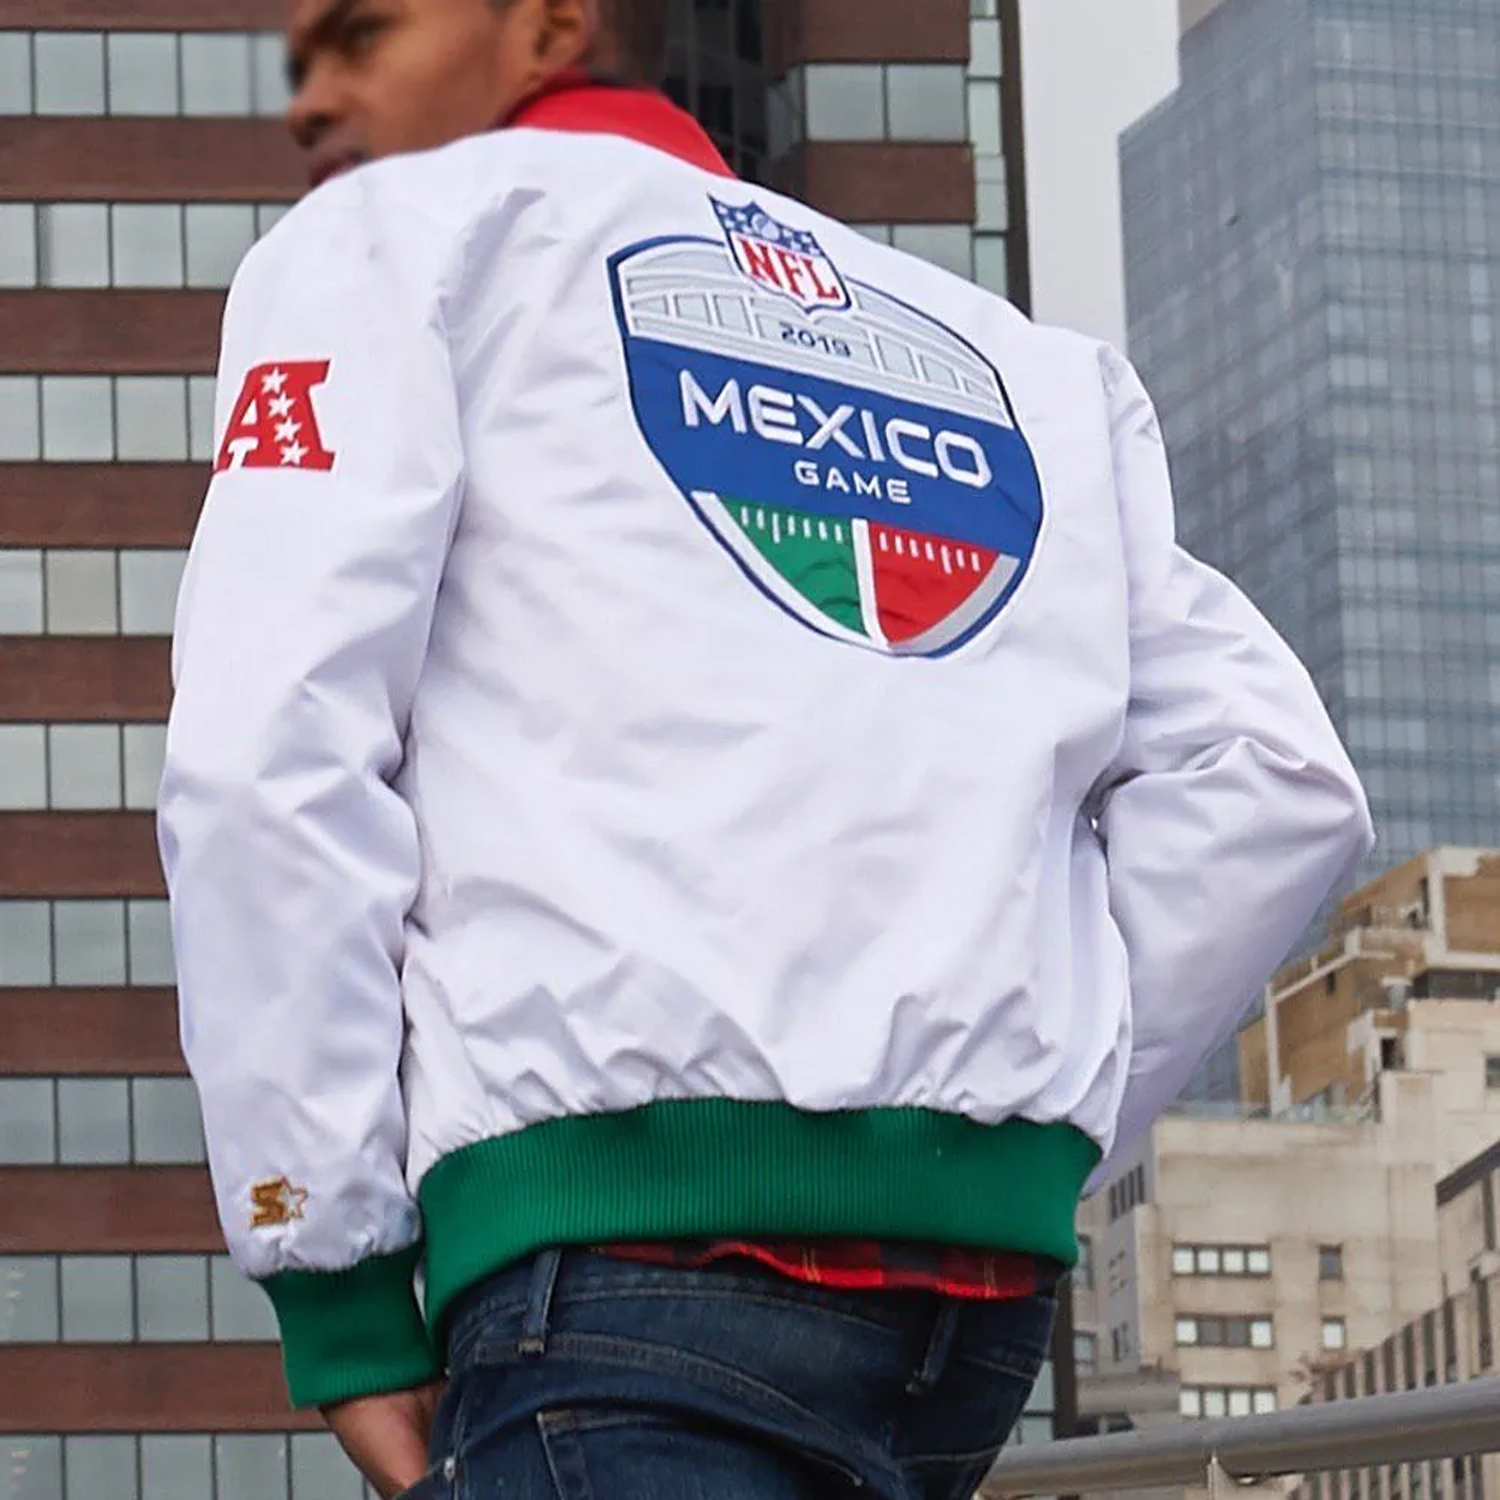 Chiefs Mexico 2019 Jacket: A Fusion of Team Pride & Mexican Heritage